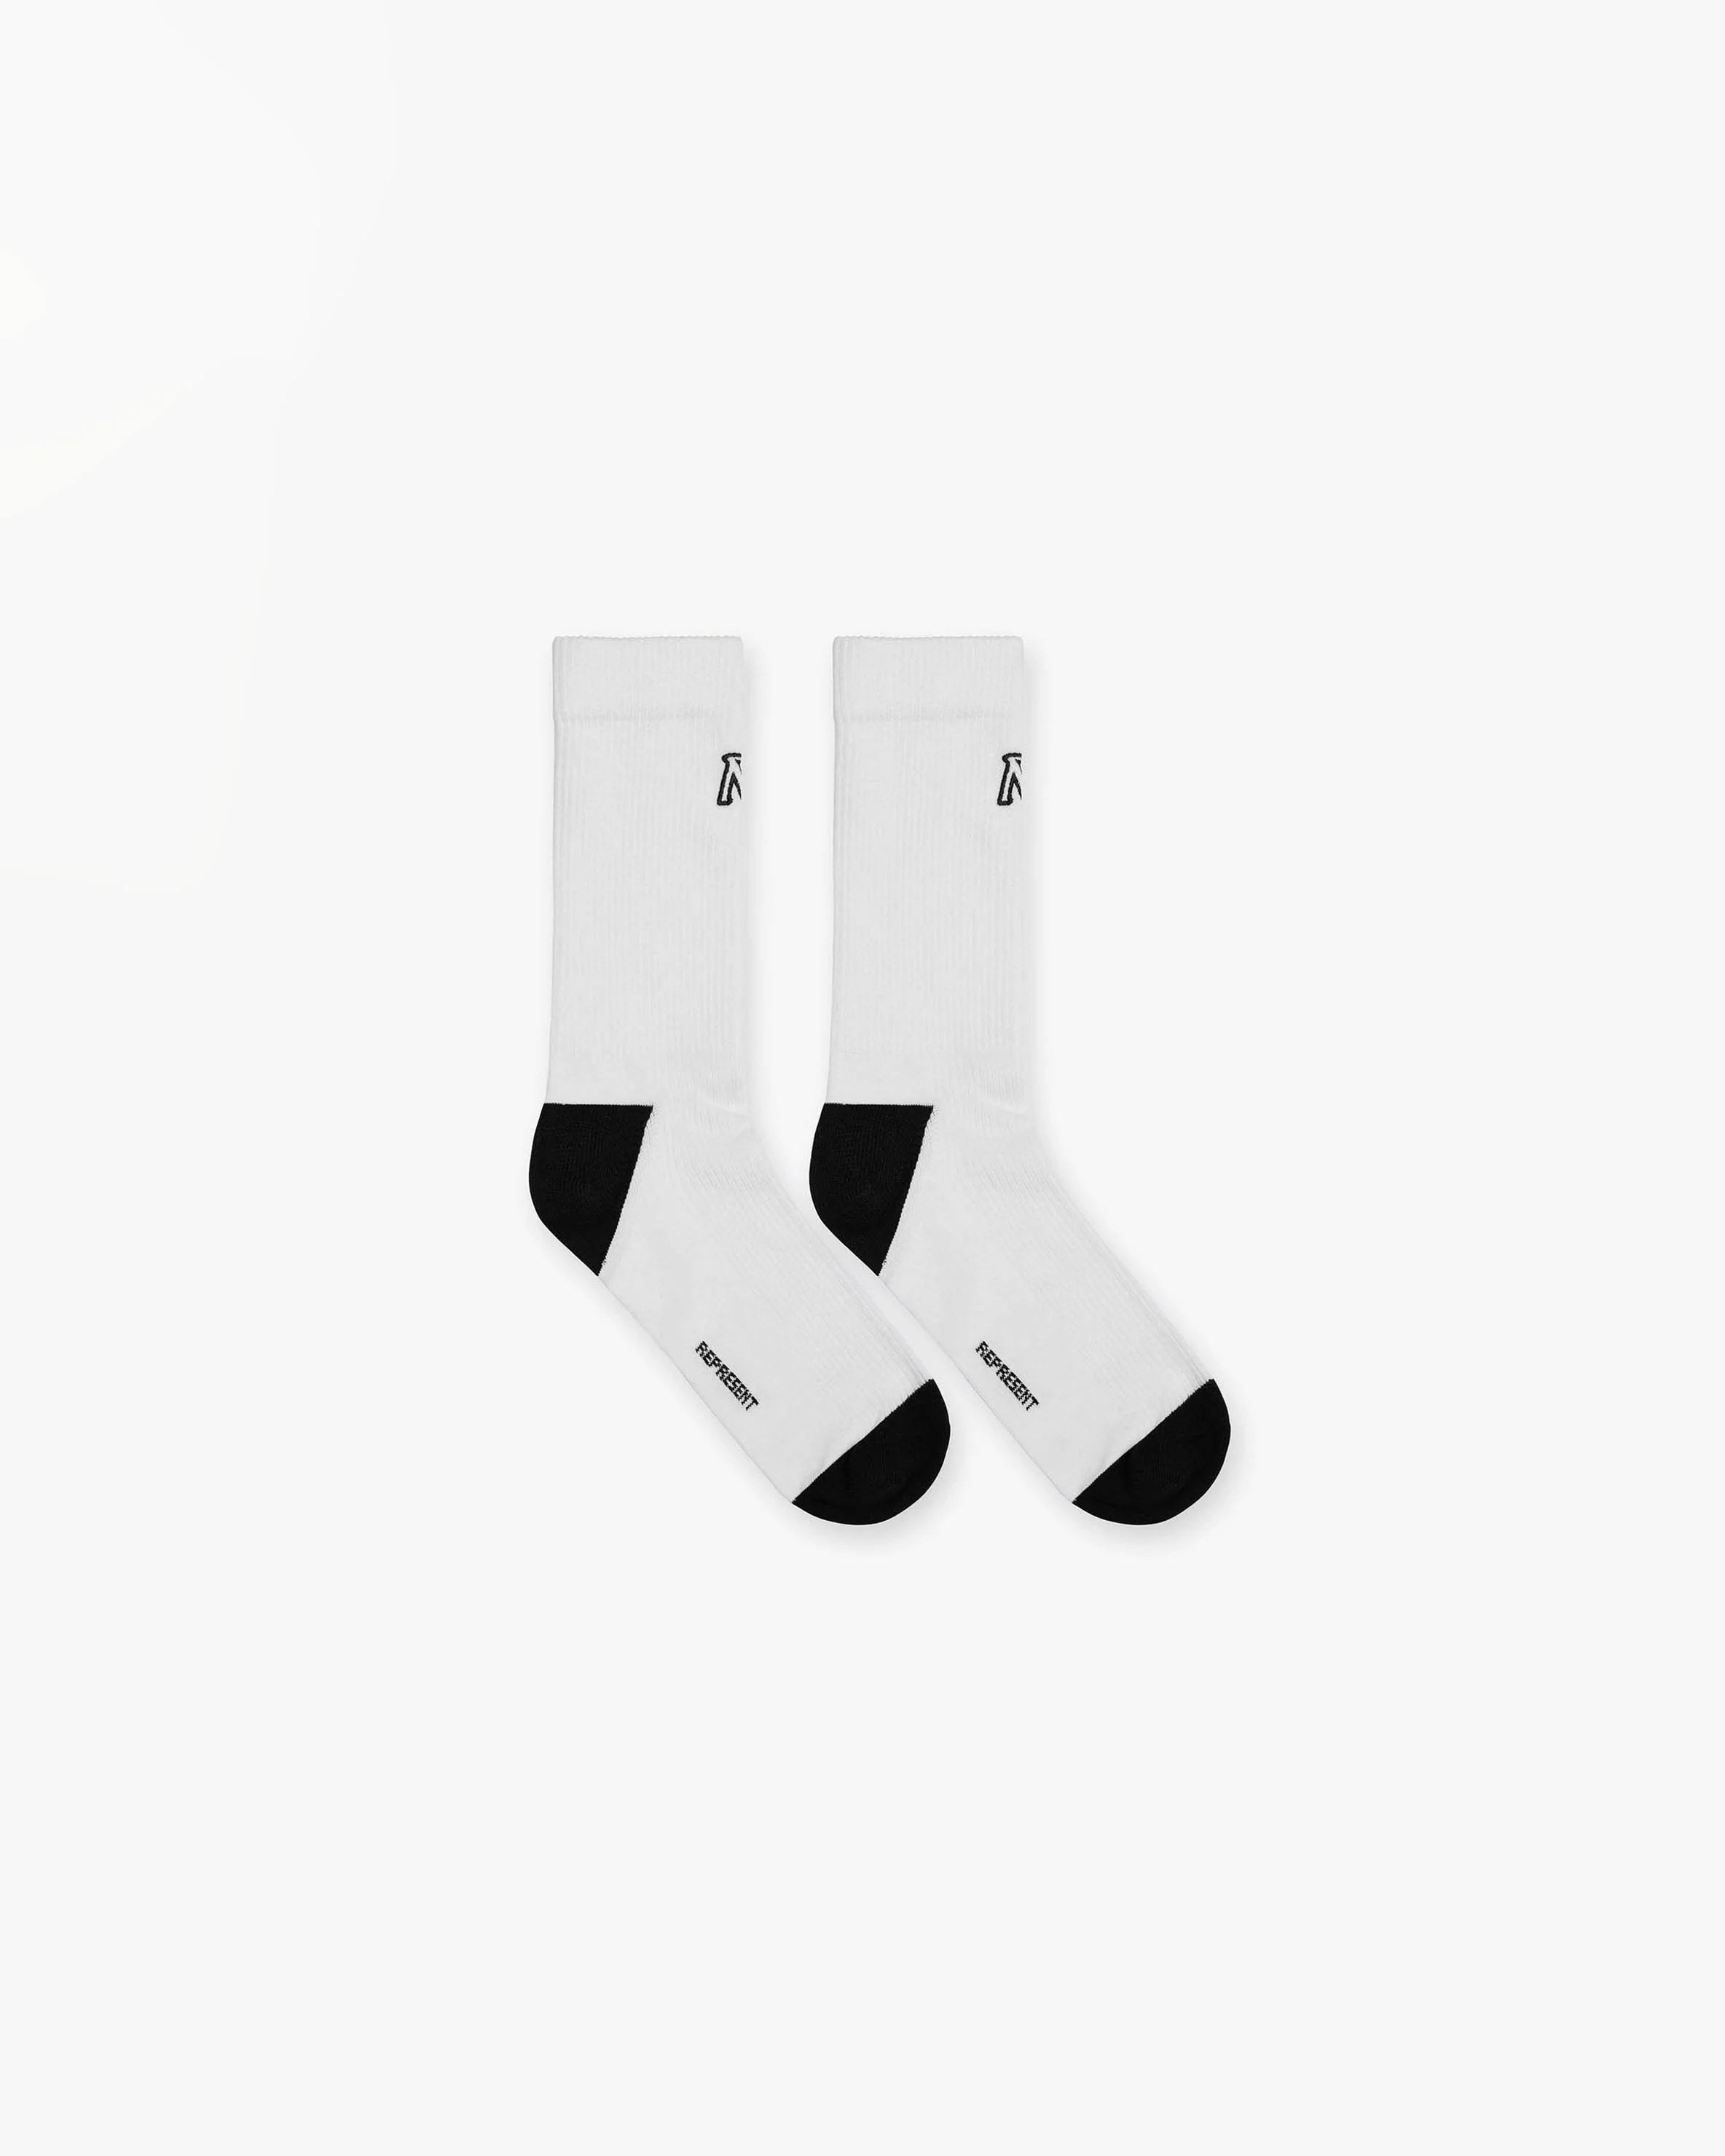 Initial Socks - Black